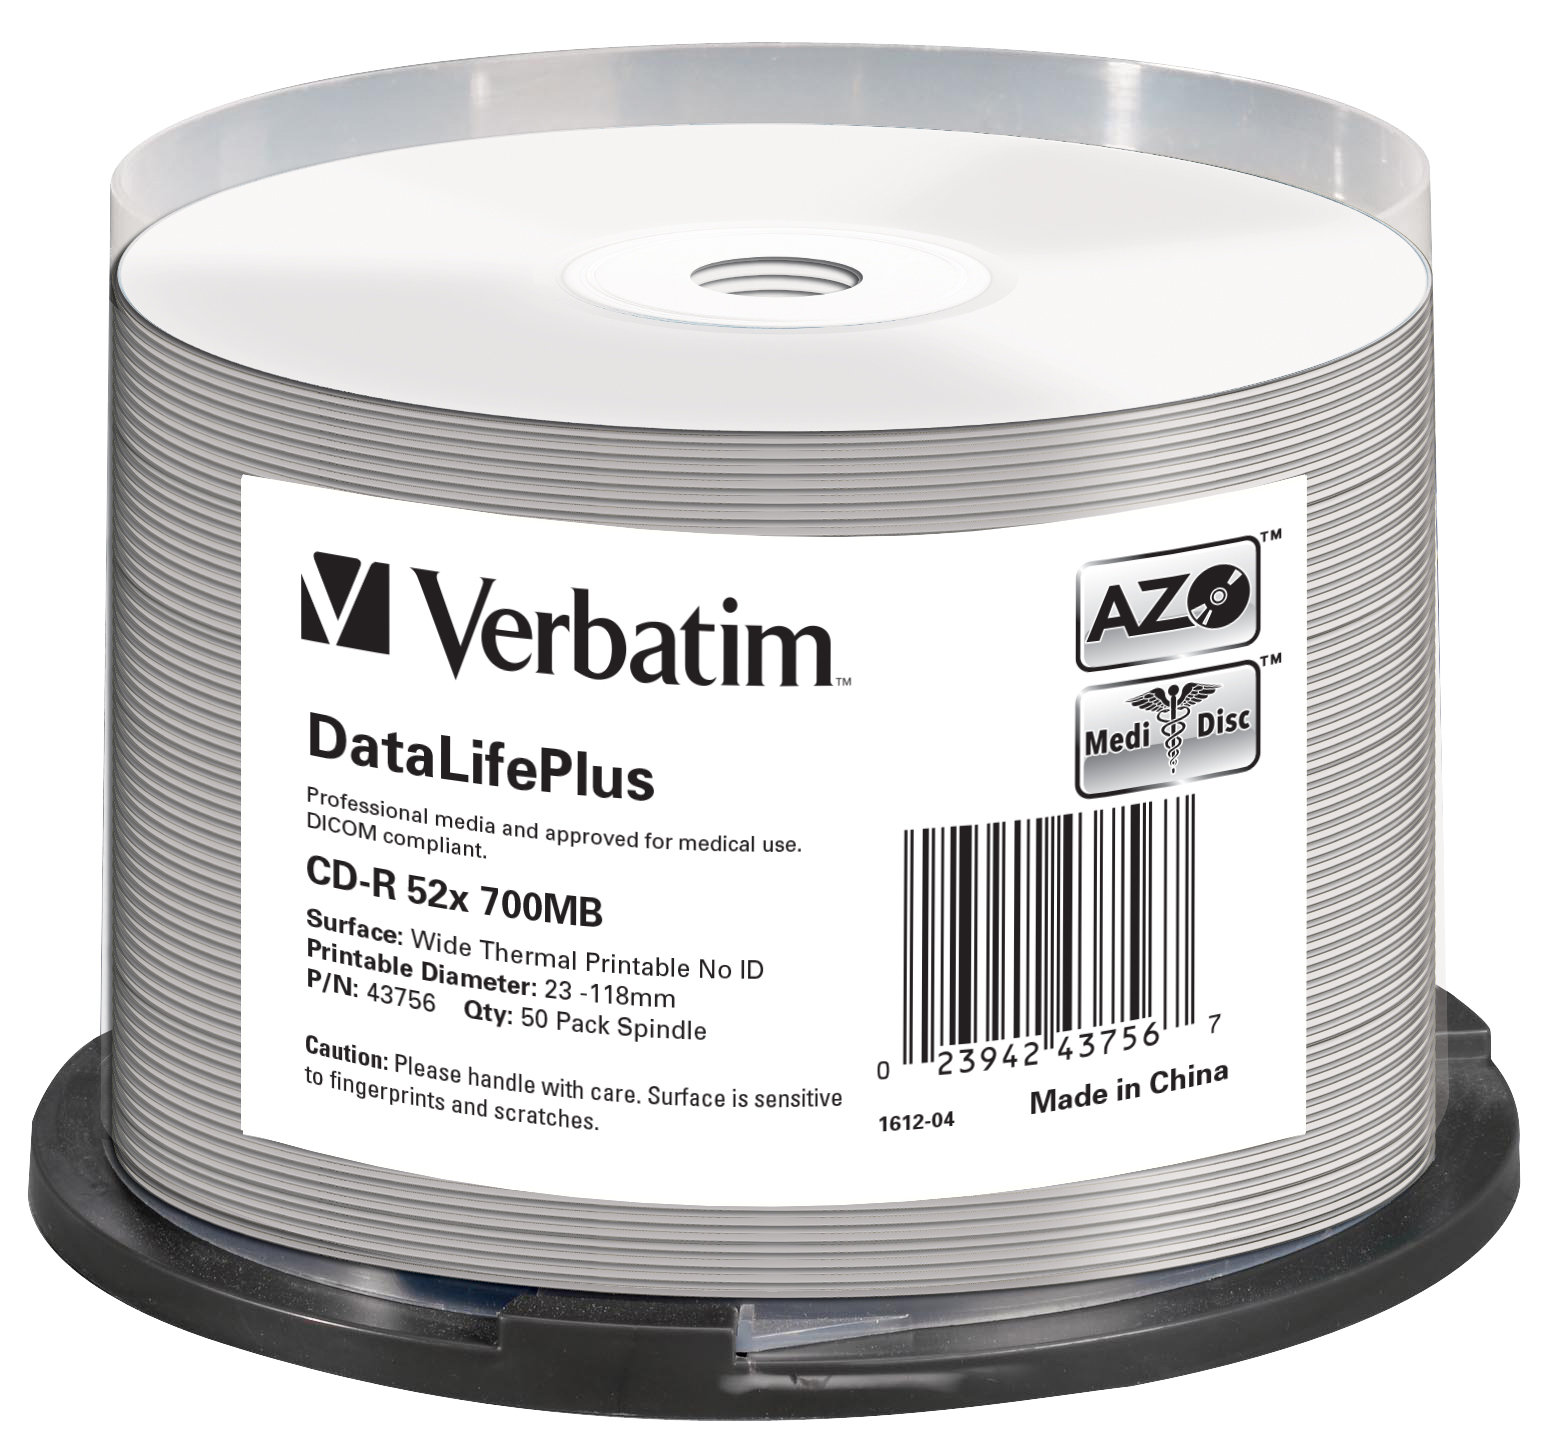 verbatim-cd-r-datalifeplus-700mb-52x-white-thermal-printable-spindle